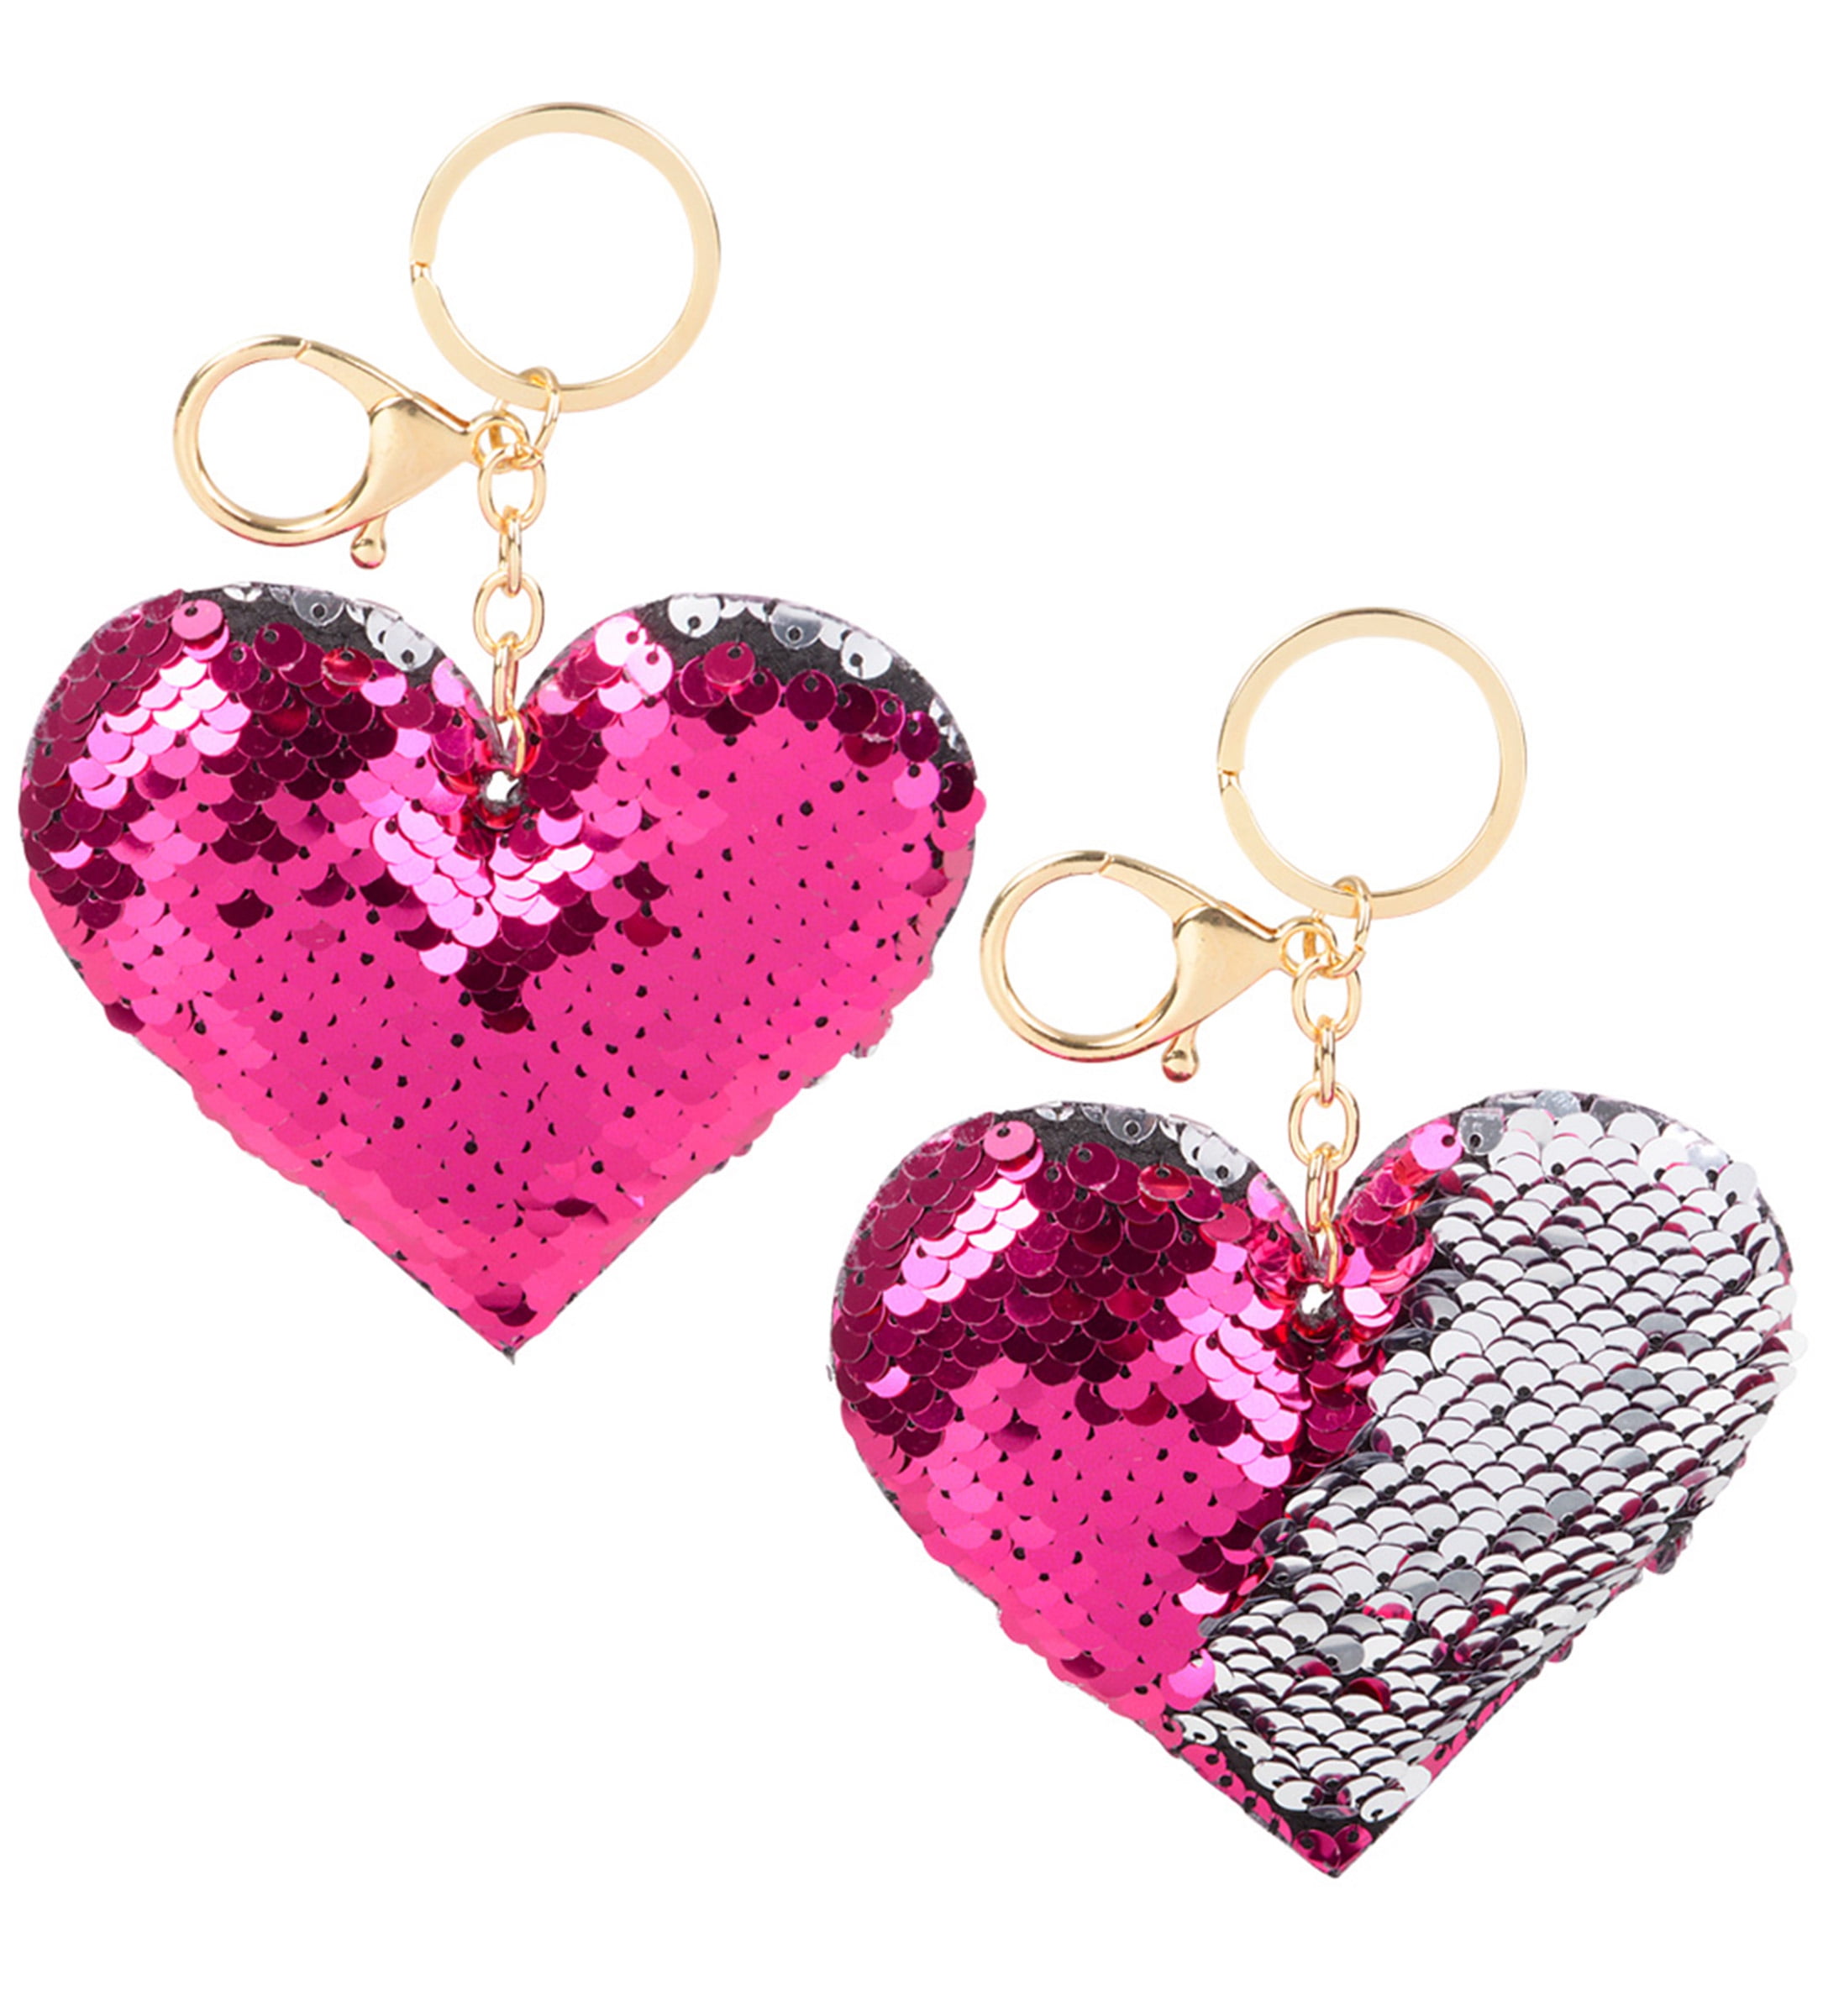 HOT pink heart keychain